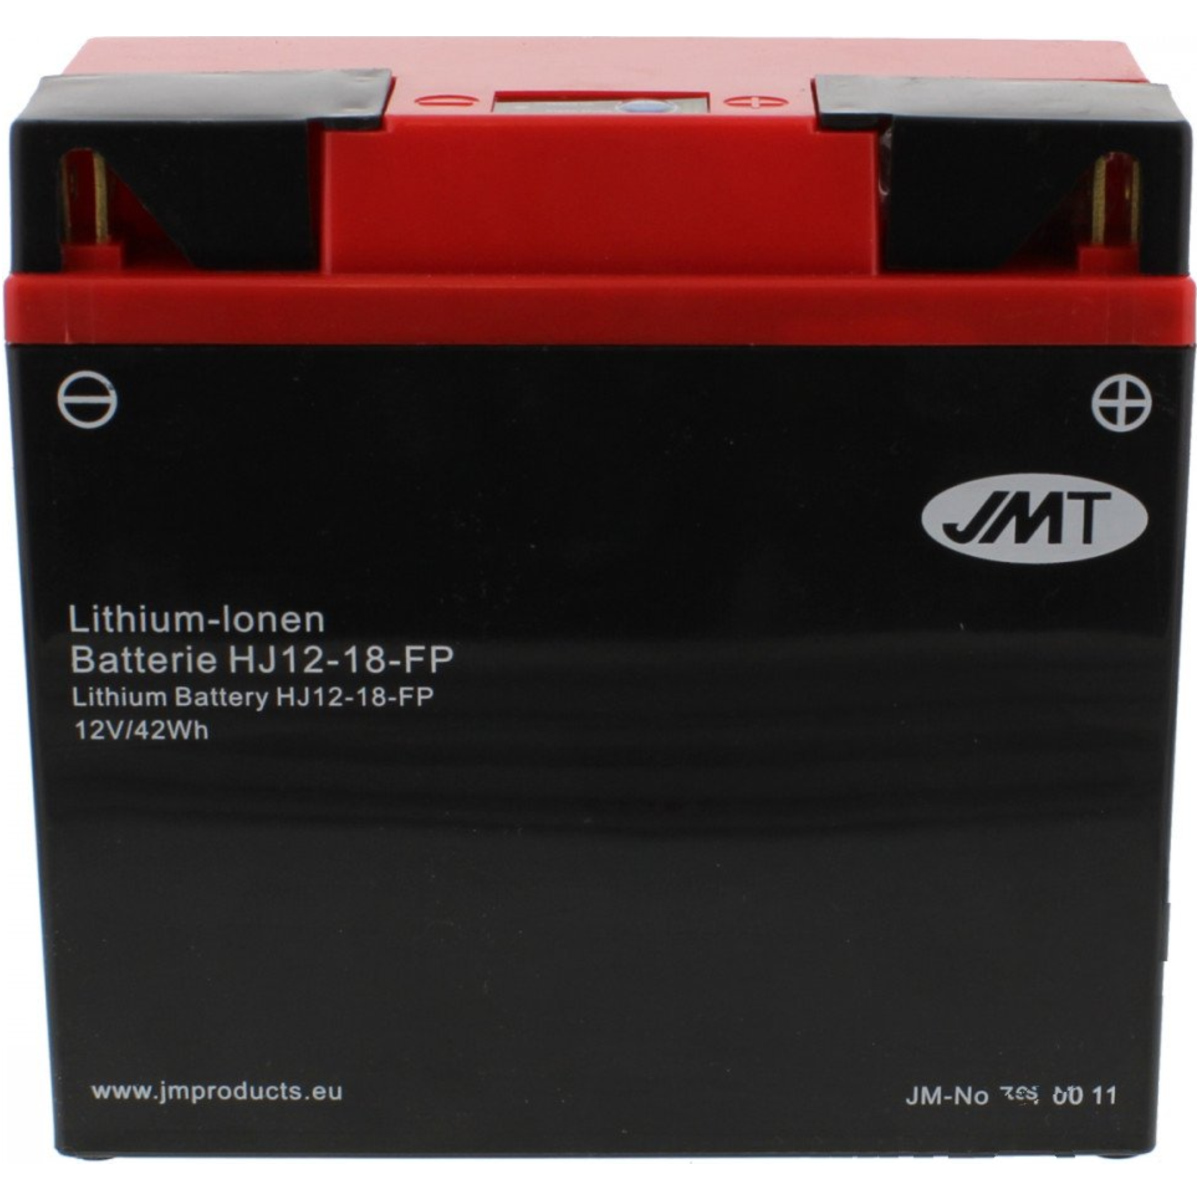 Batterie garten hj12-18-fpjmt von JMT